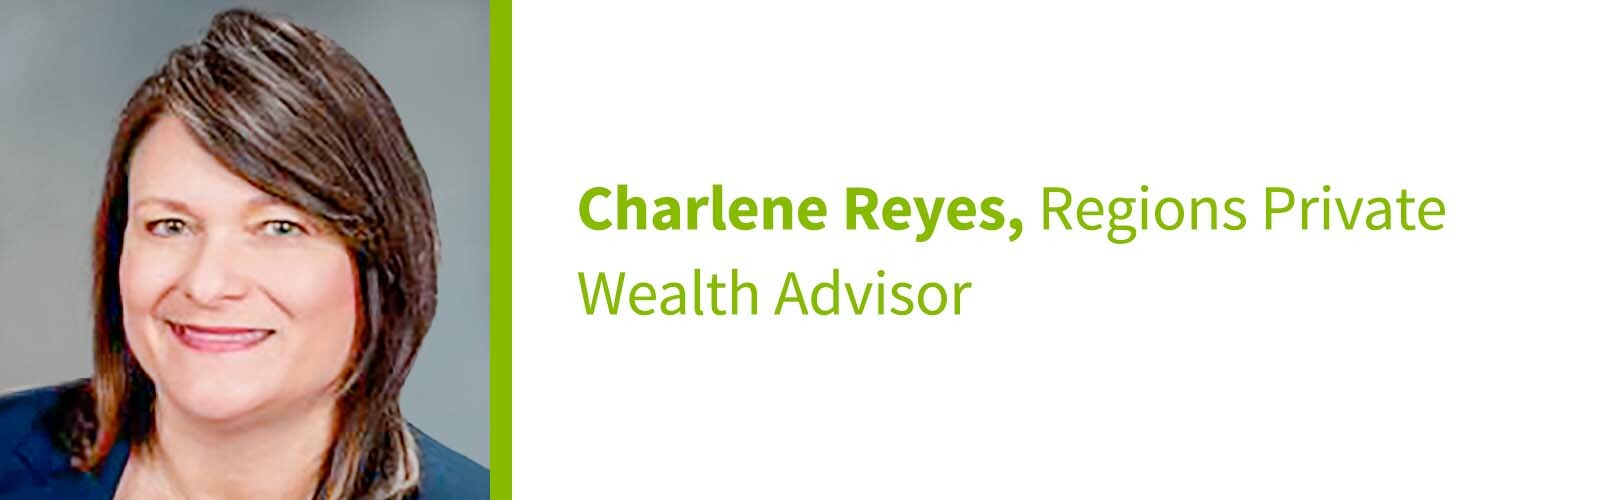 Charlene Reyes, Regions Private Wealth Advisor, based in Mobile, Alabama